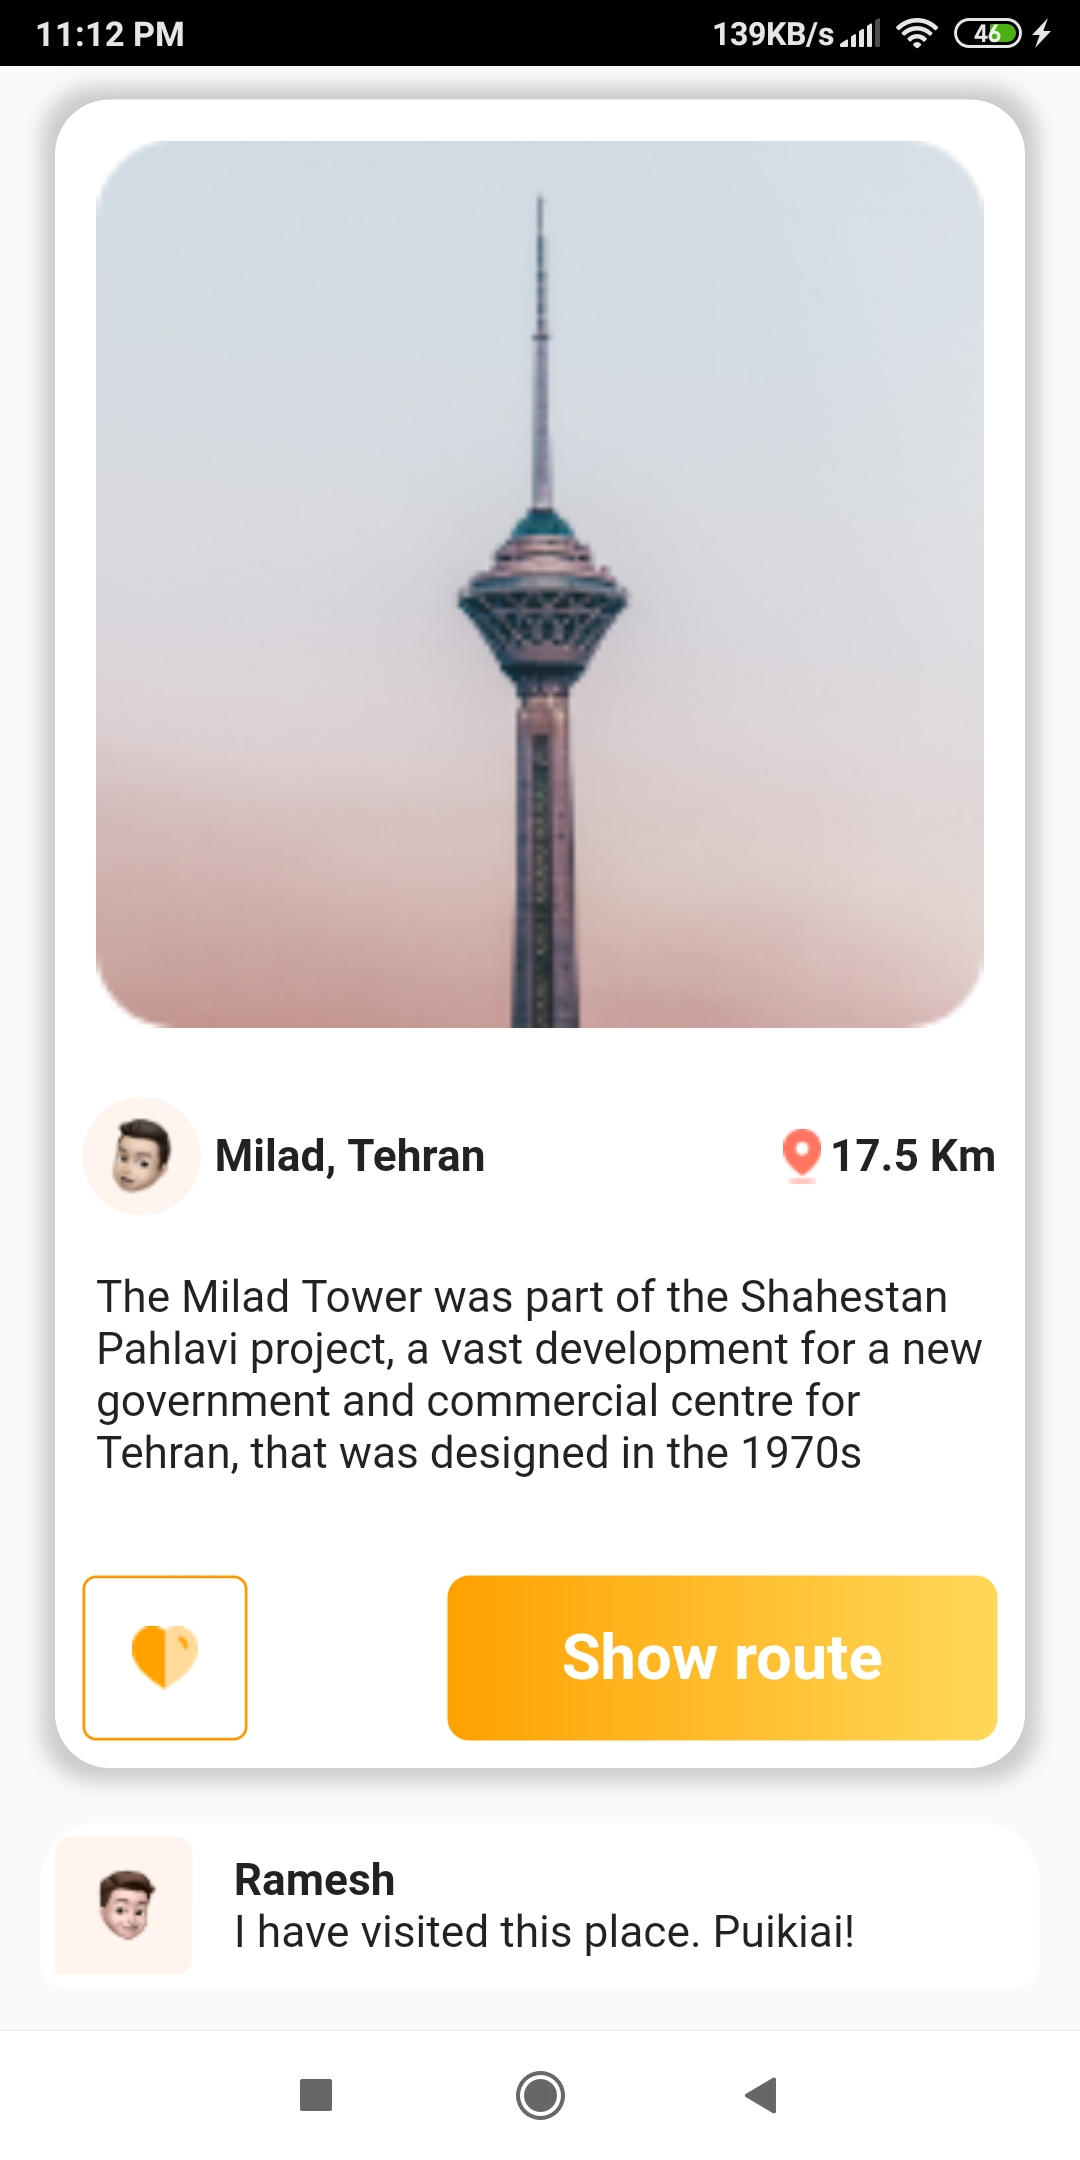 A Flutter UI for travel app